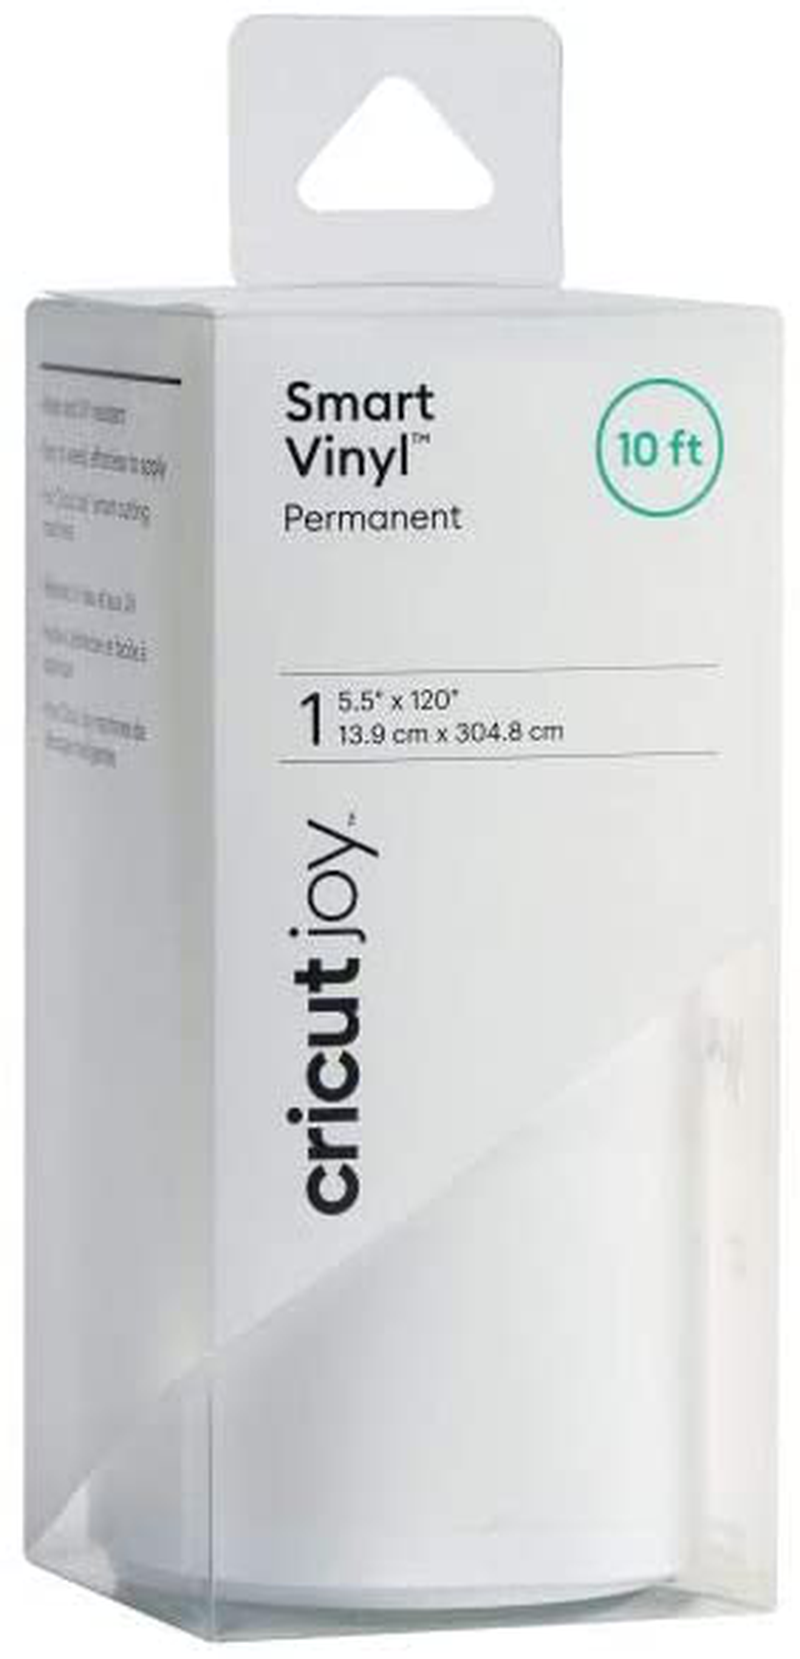 Cricut Joy Smart Vinyl - Permanent - Adhesive Decal Roll